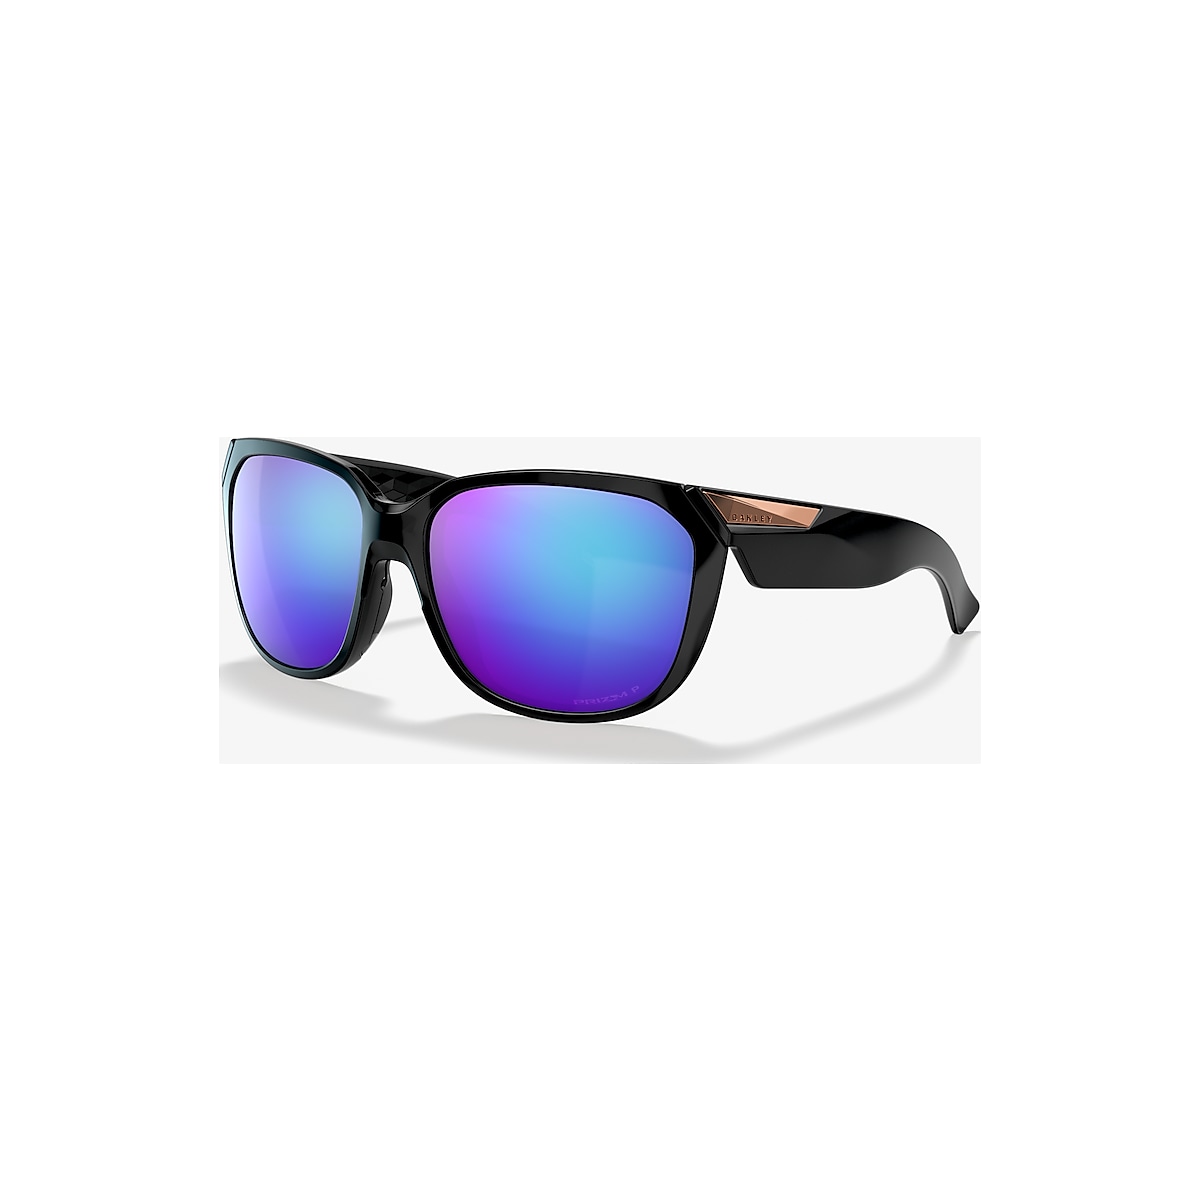 OAKLEY - Rev Up - POLARIZED sunglasses - OO9432-13 59 PRIZM - Matte Brown